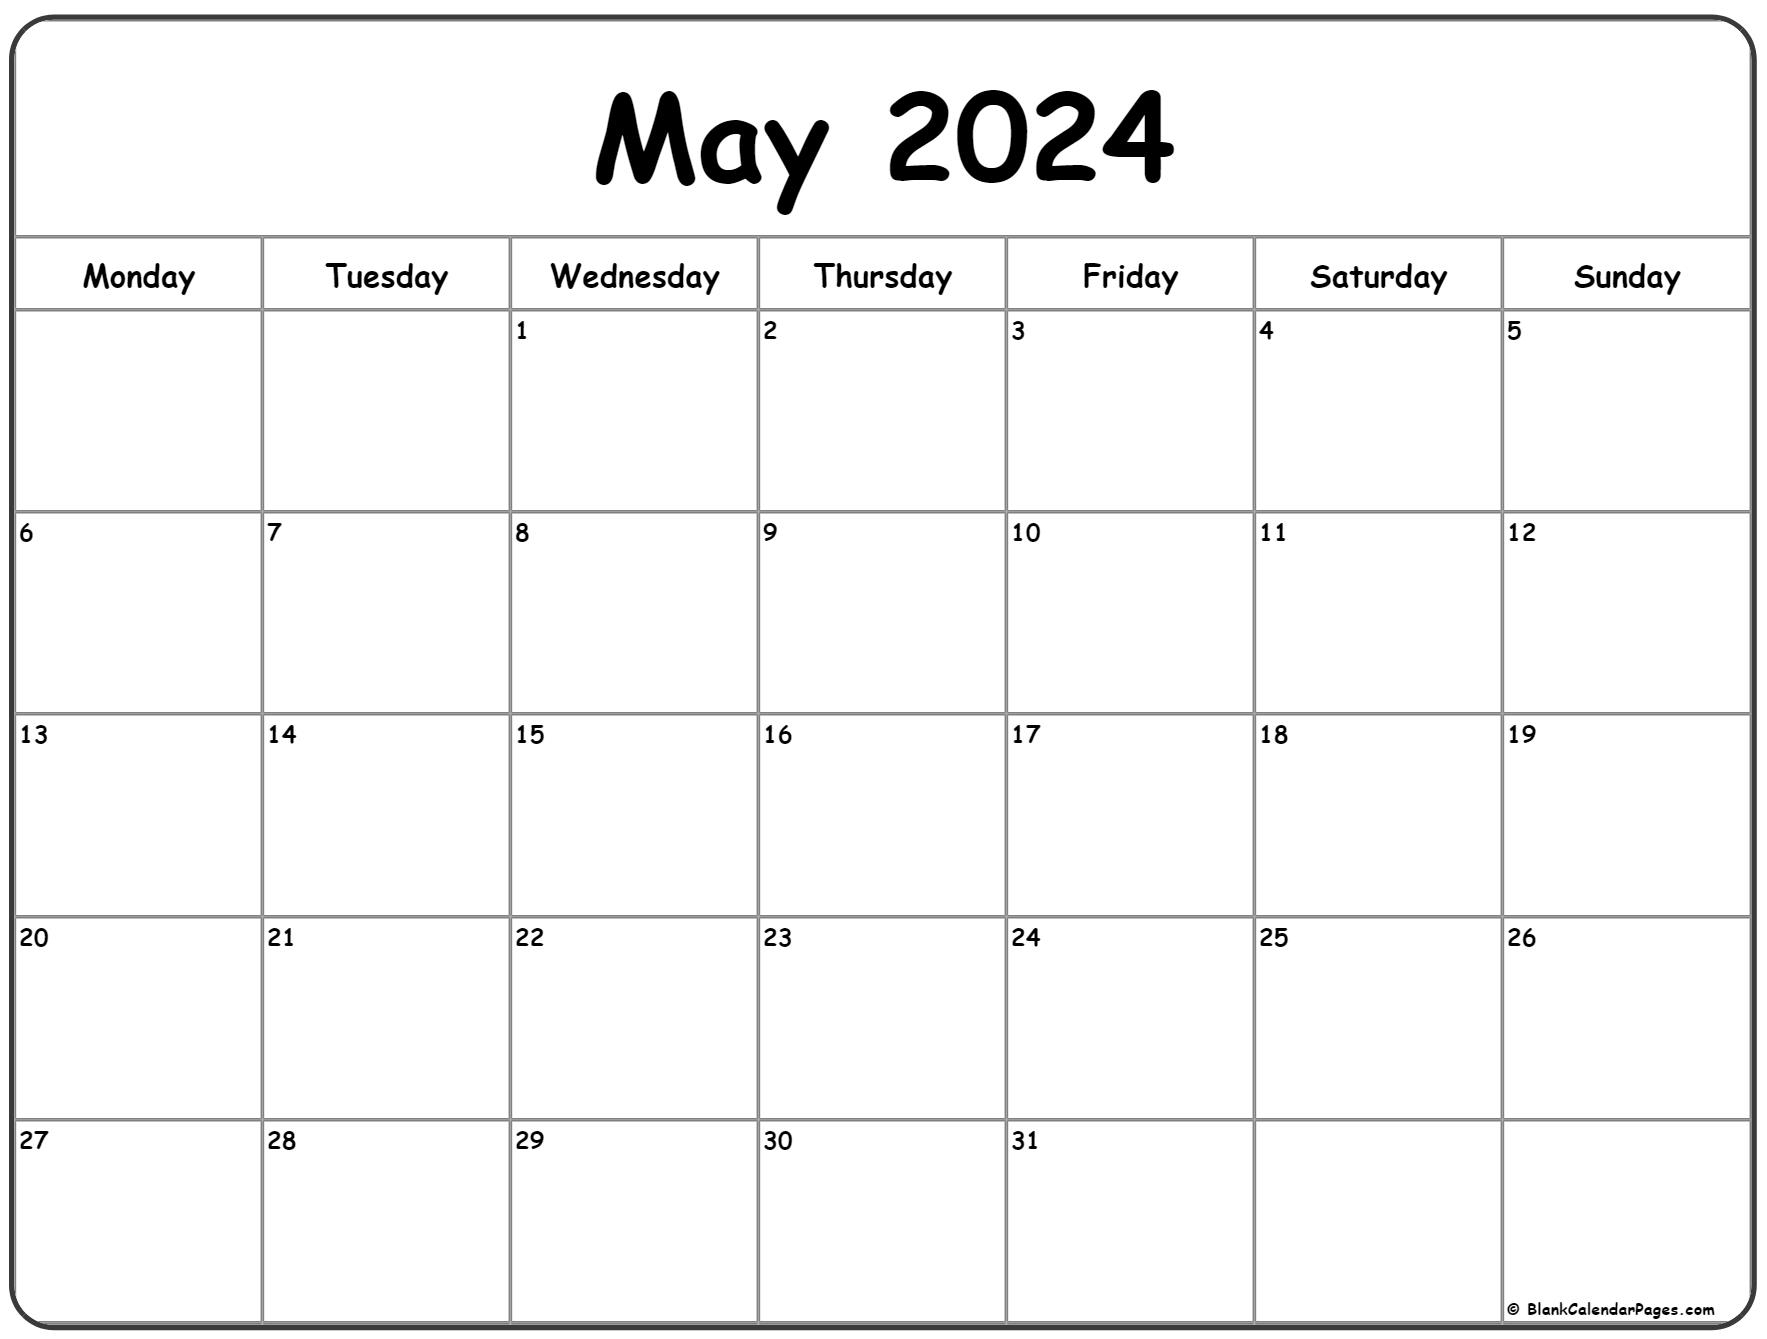 May 2024 Monday Calendar | Monday To Sunday for Blank May 2024 Calendar Printable